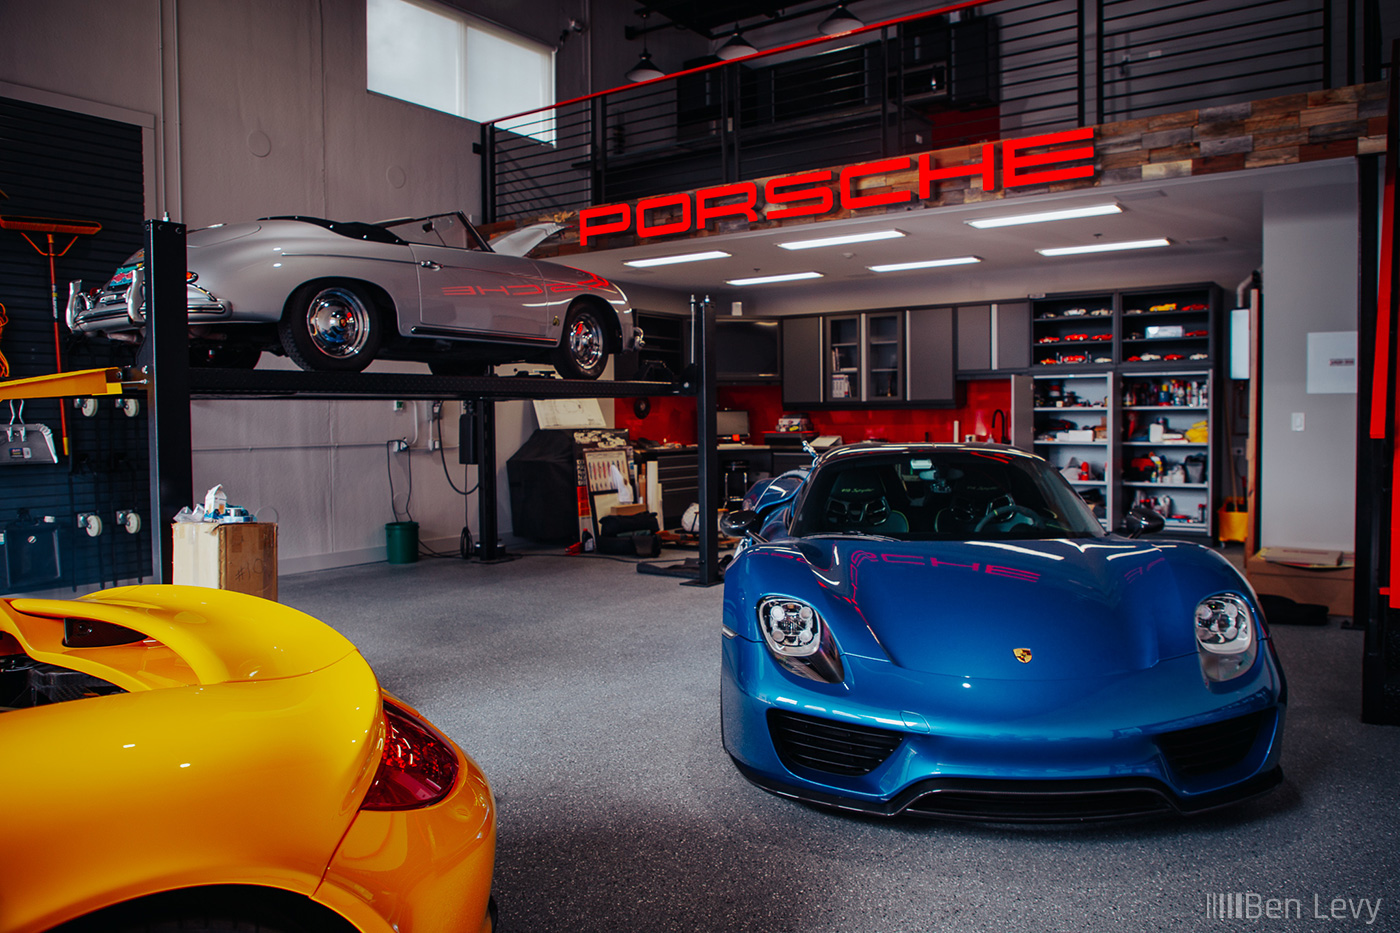 356 Cabriolet and 918 in Garage with Porsche Theme